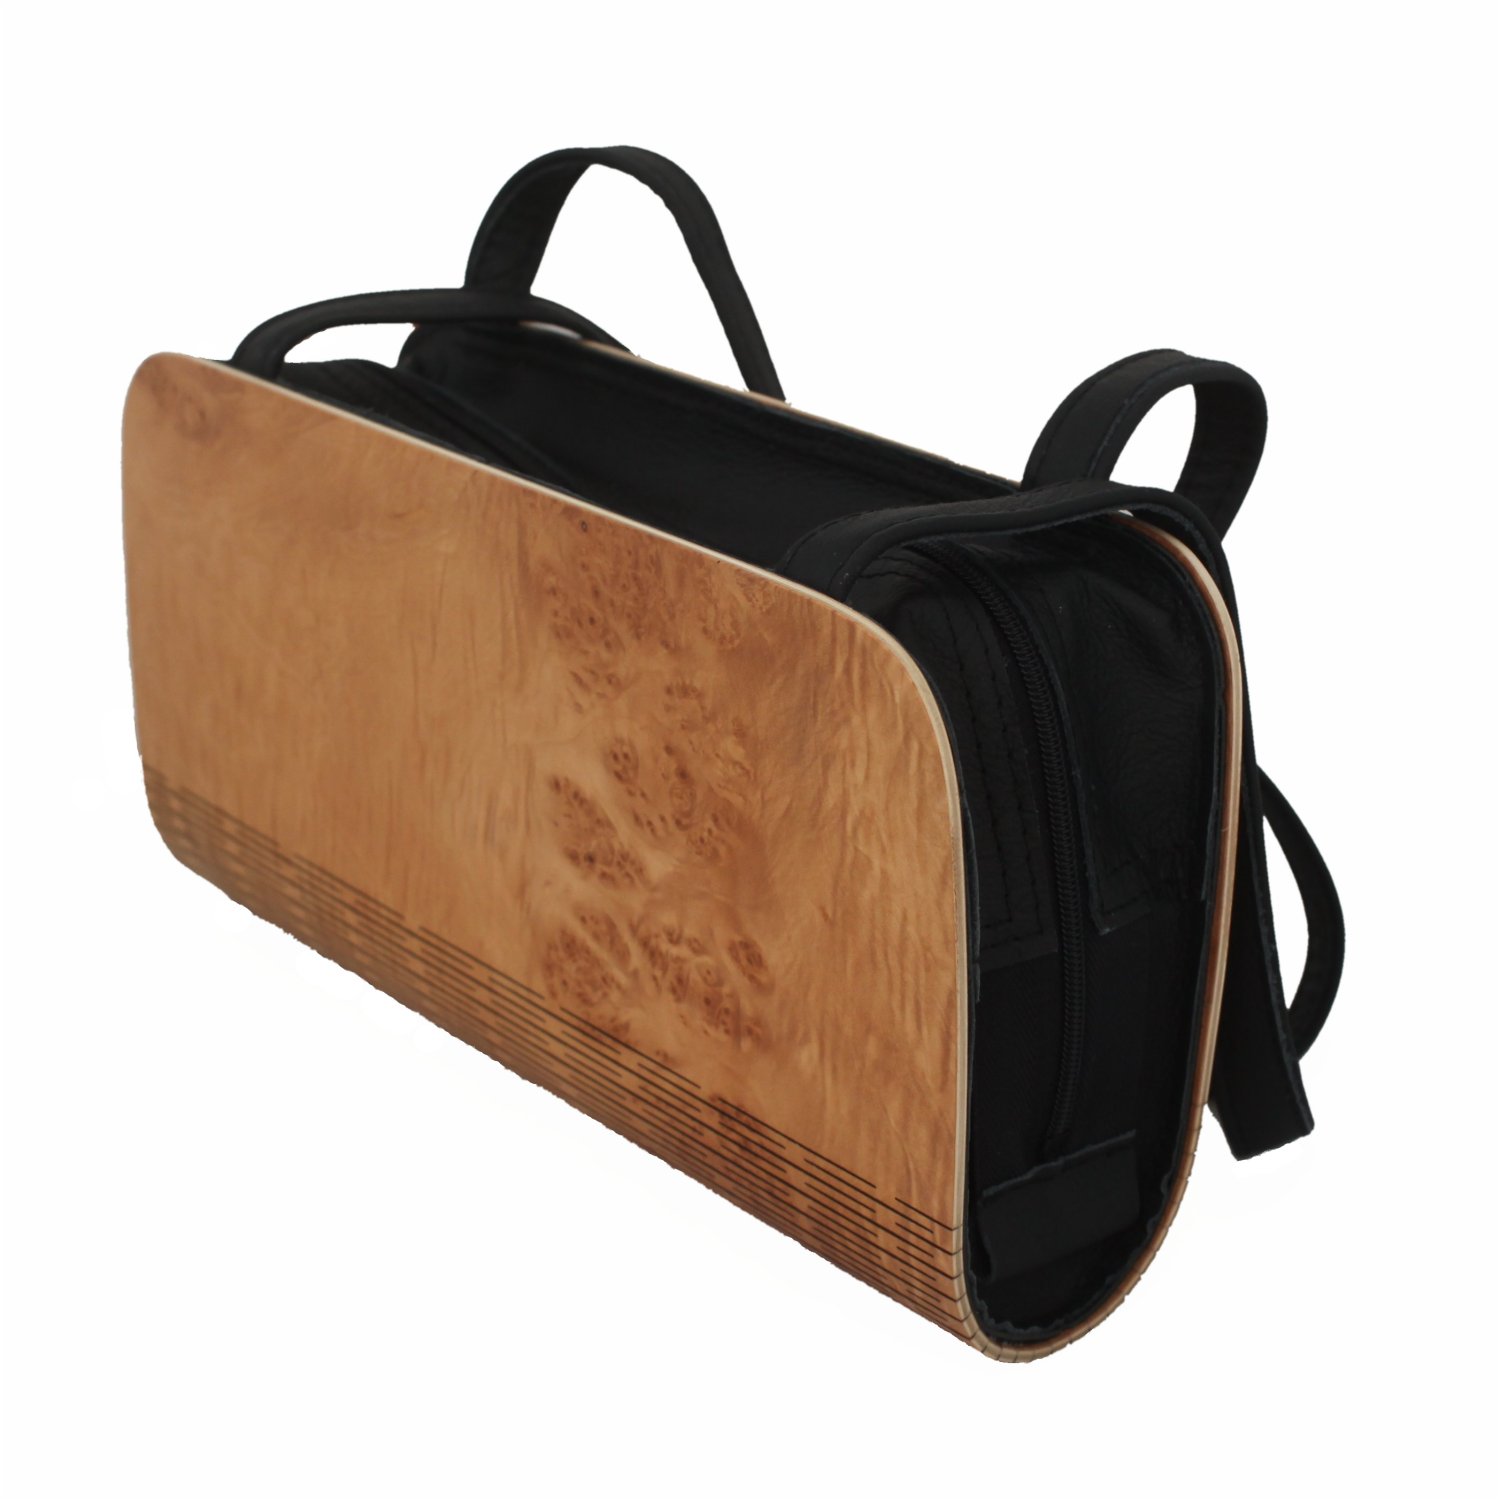 Holz-Fichtner Handtasche aus Holz